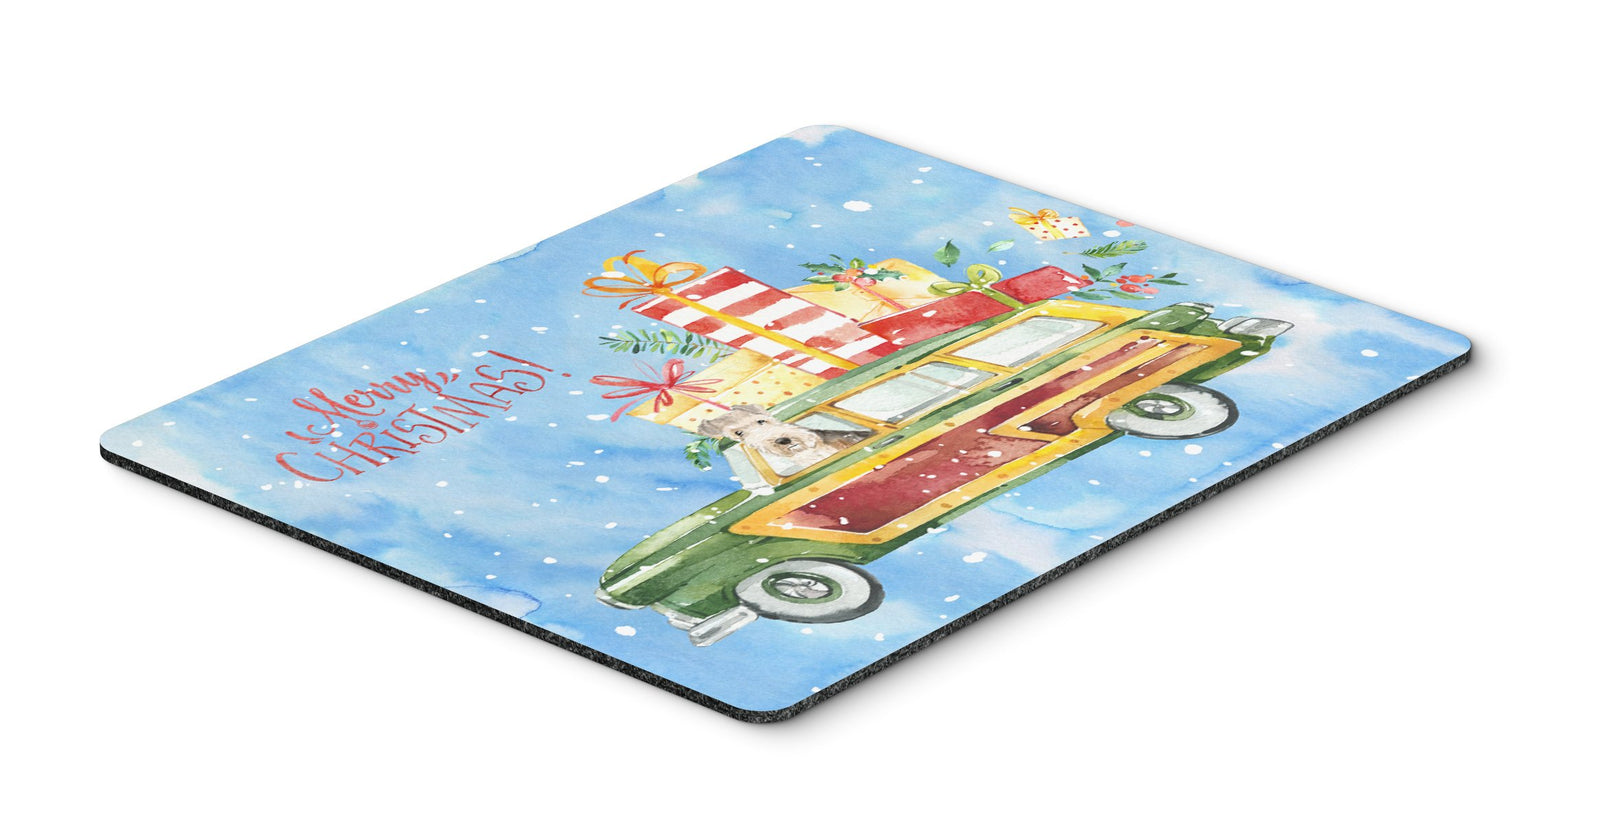 Merry Christmas Lakeland Terrier Mouse Pad, Hot Pad or Trivet CK2412MP by Caroline's Treasures